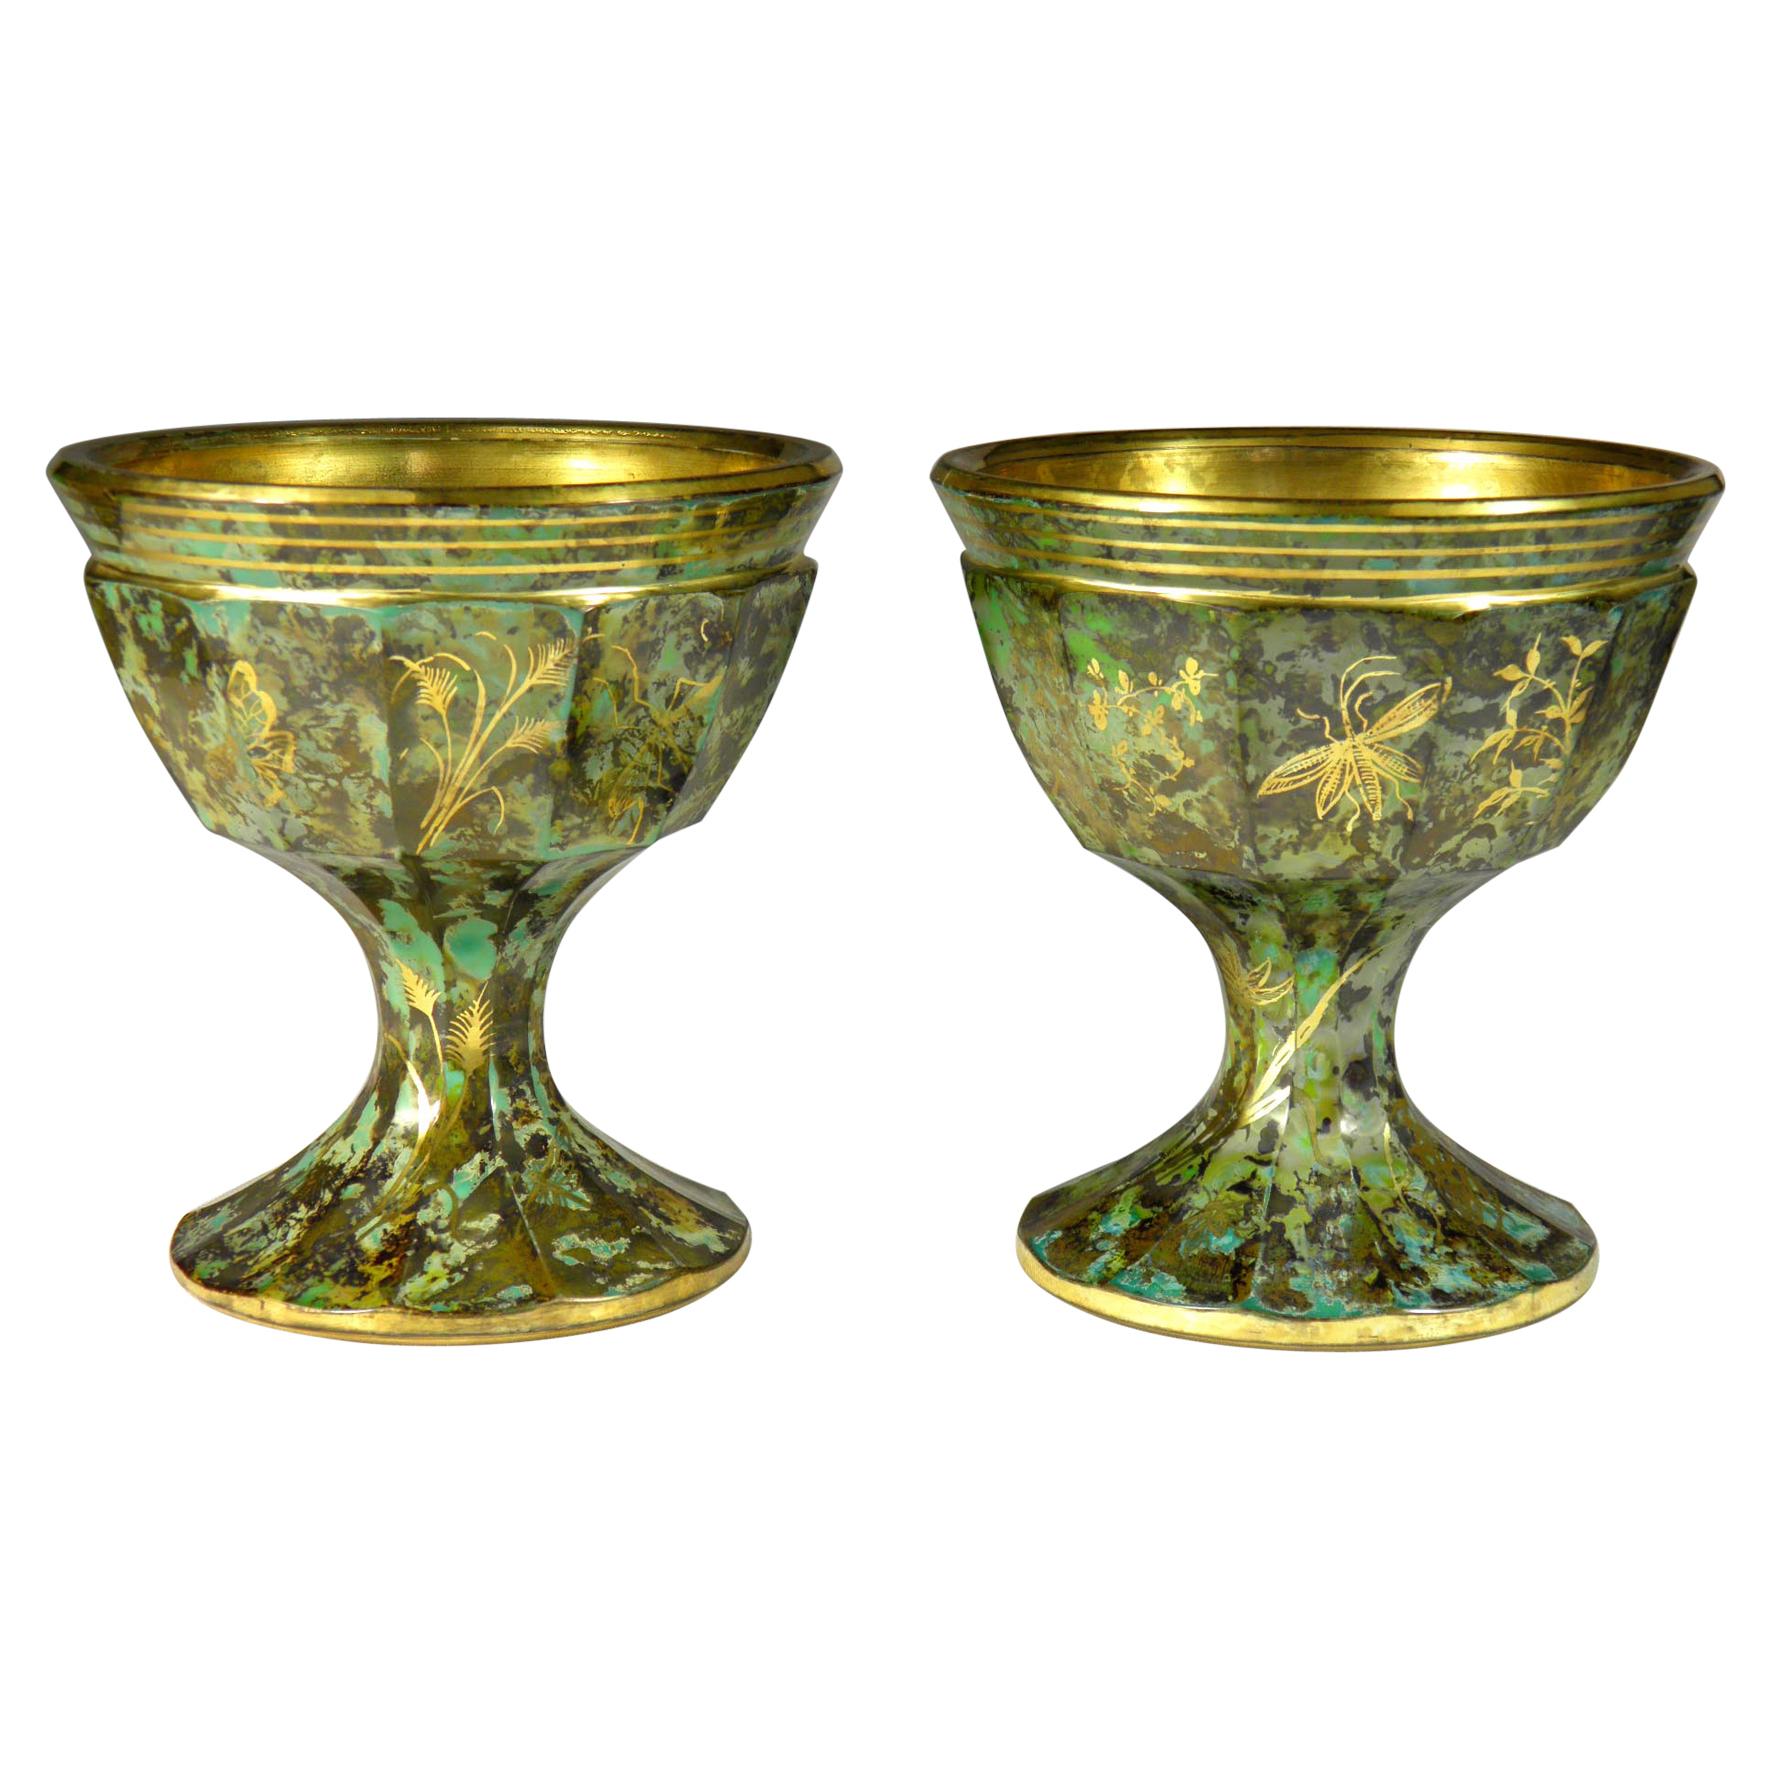 Pair of Bowls with Imitation Semi-Precious Stone Bohemian Glass, 20th Century